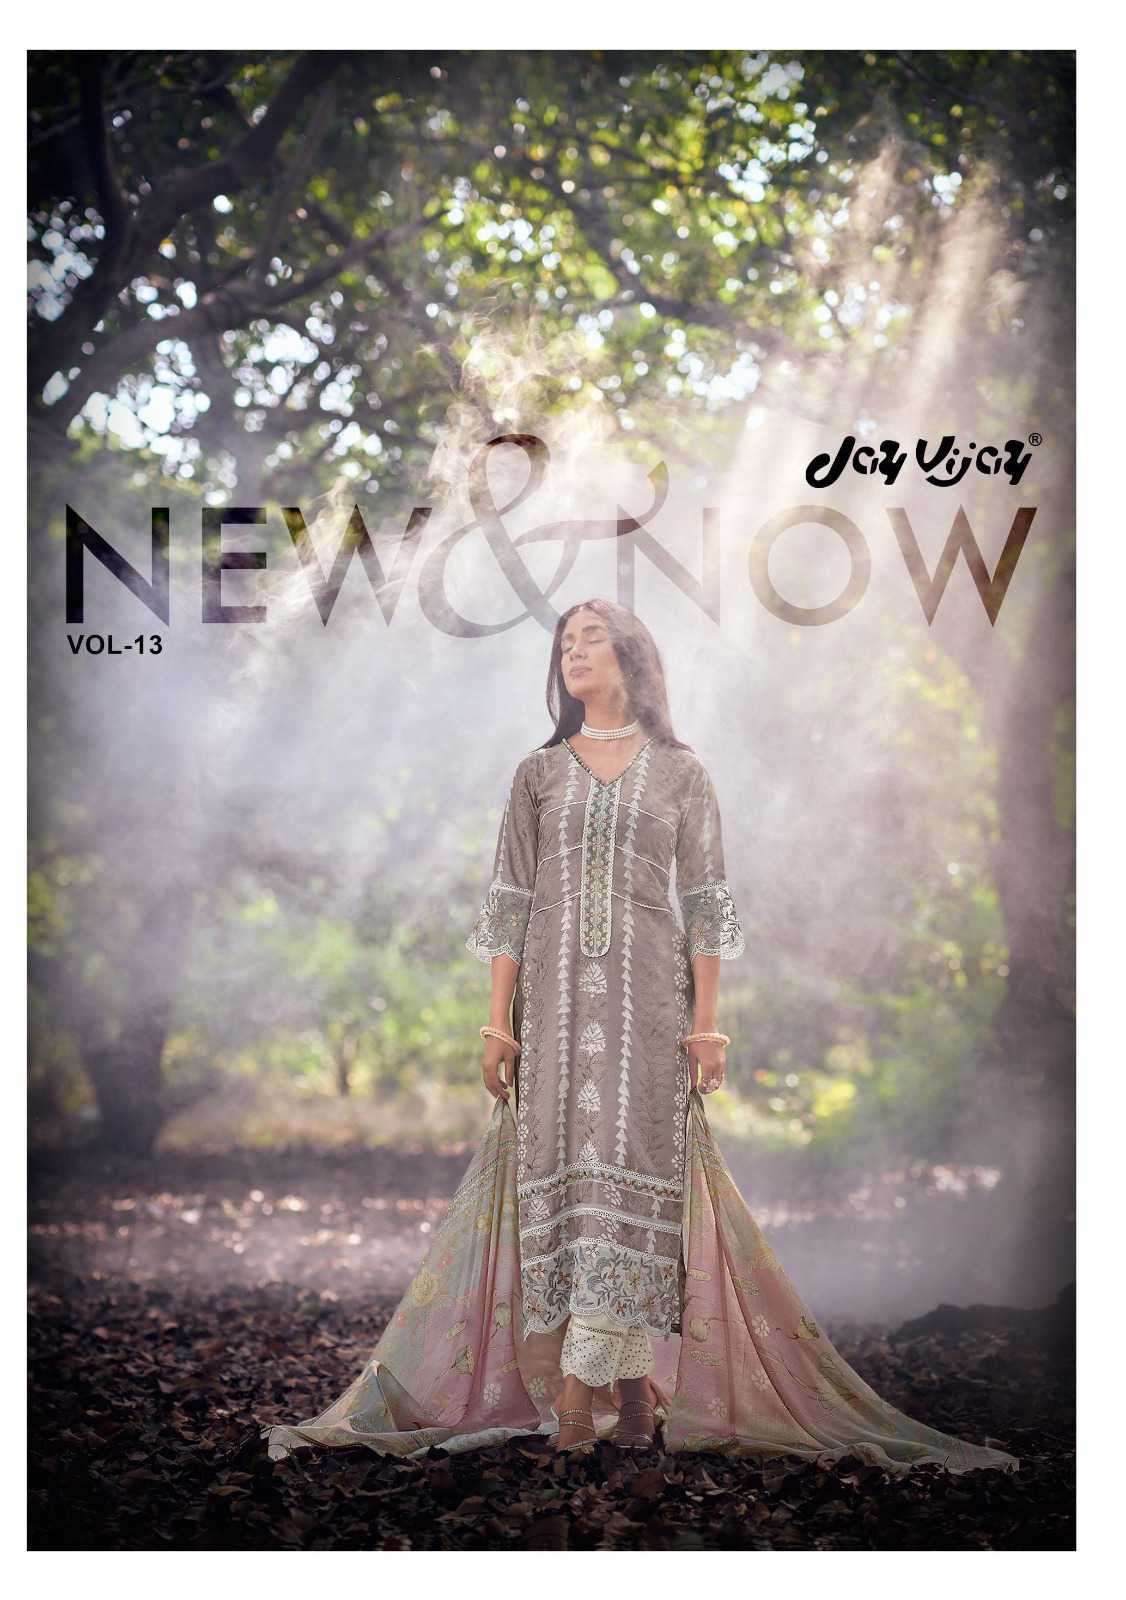 Jay Vijay New And Now Vol 13 Fancy Silk Exclusive Dress Dealer